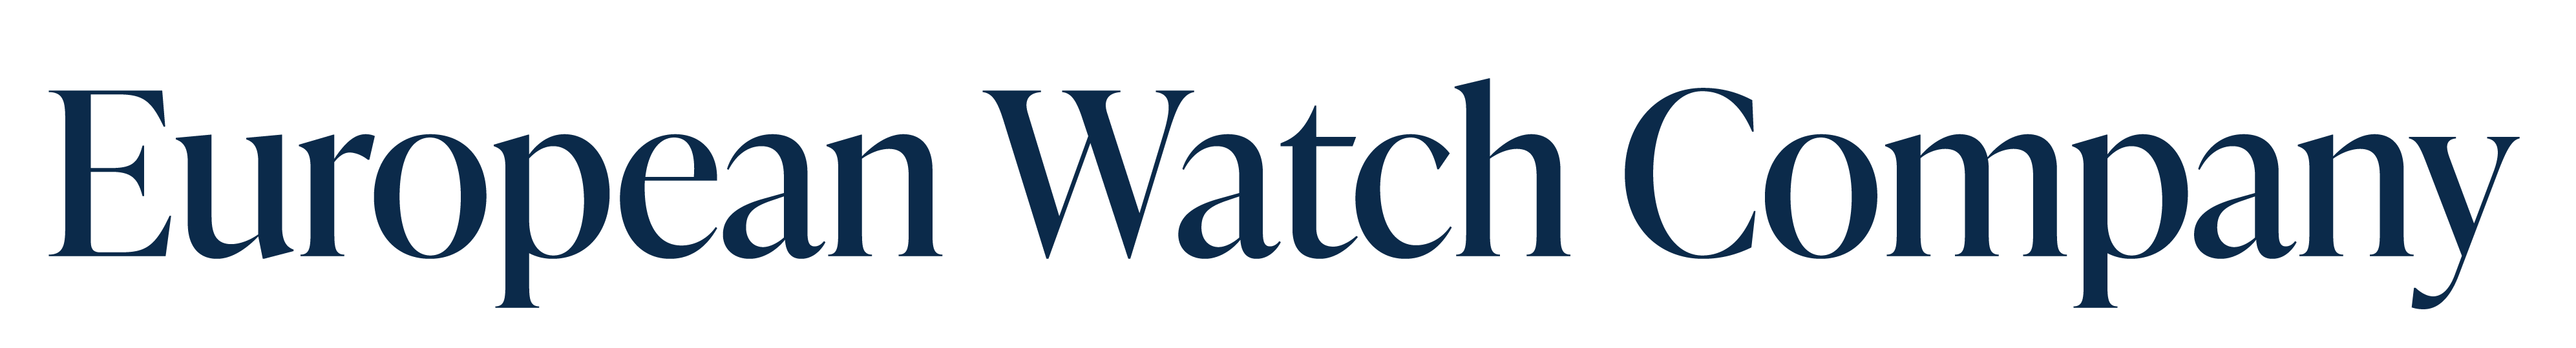 European Watch Company IOS App